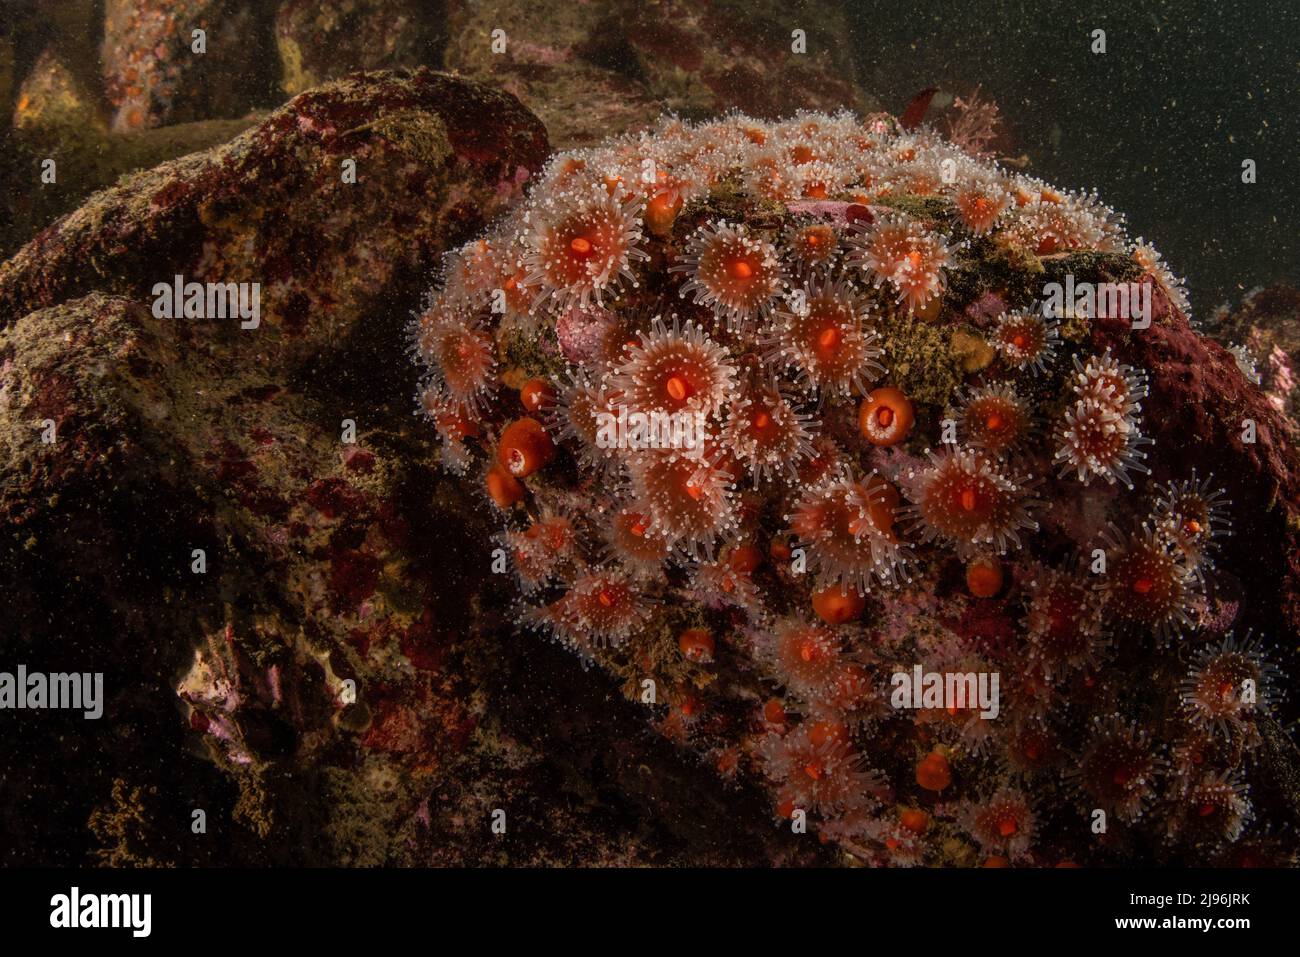 A colony of Strawberry anemones (Corynactis californica) on the Pacific ocean floor in Monterey Bay, California, North America. Stock Photo